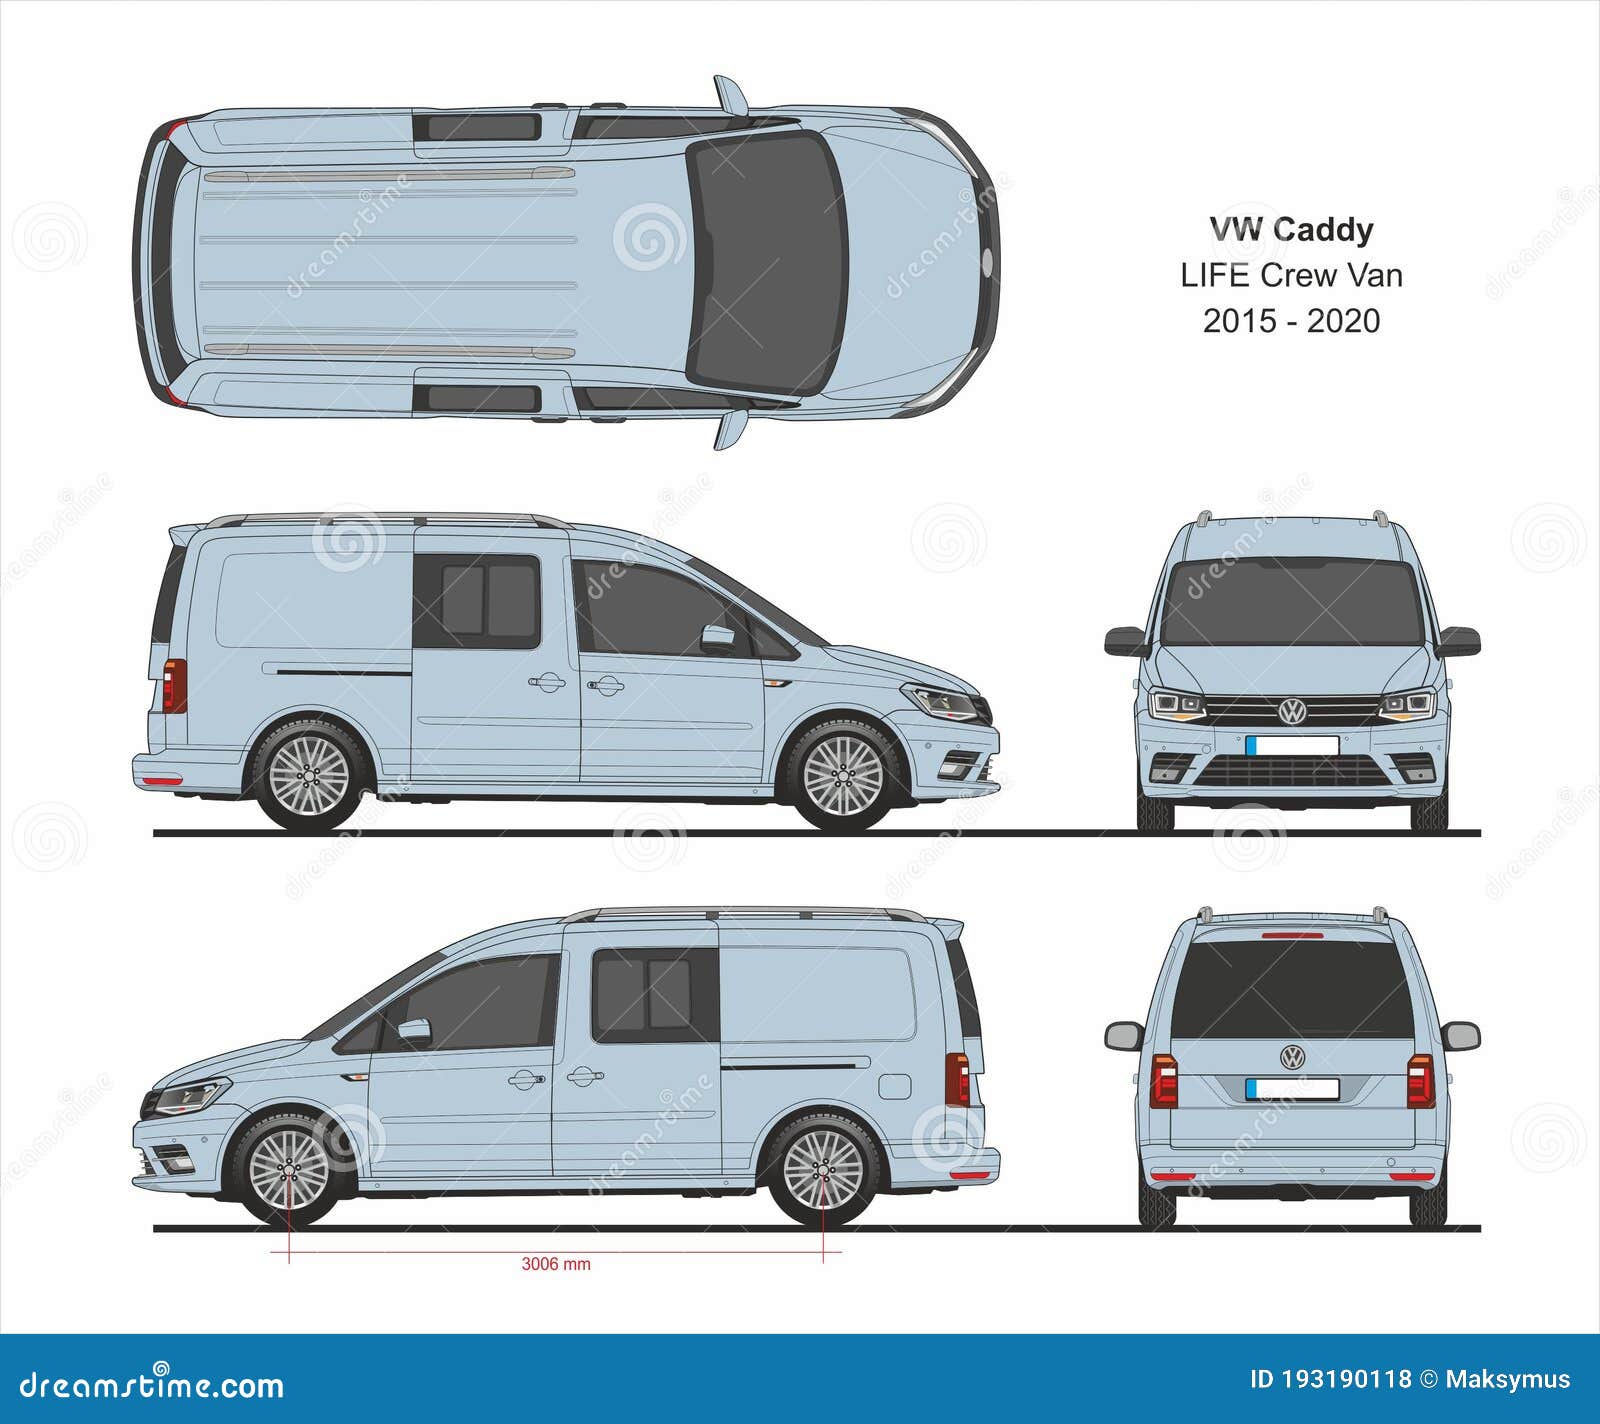 VW Life Maxi Crew Van 2015-present Editorial Stock Photo - Illustration branding: 193190118